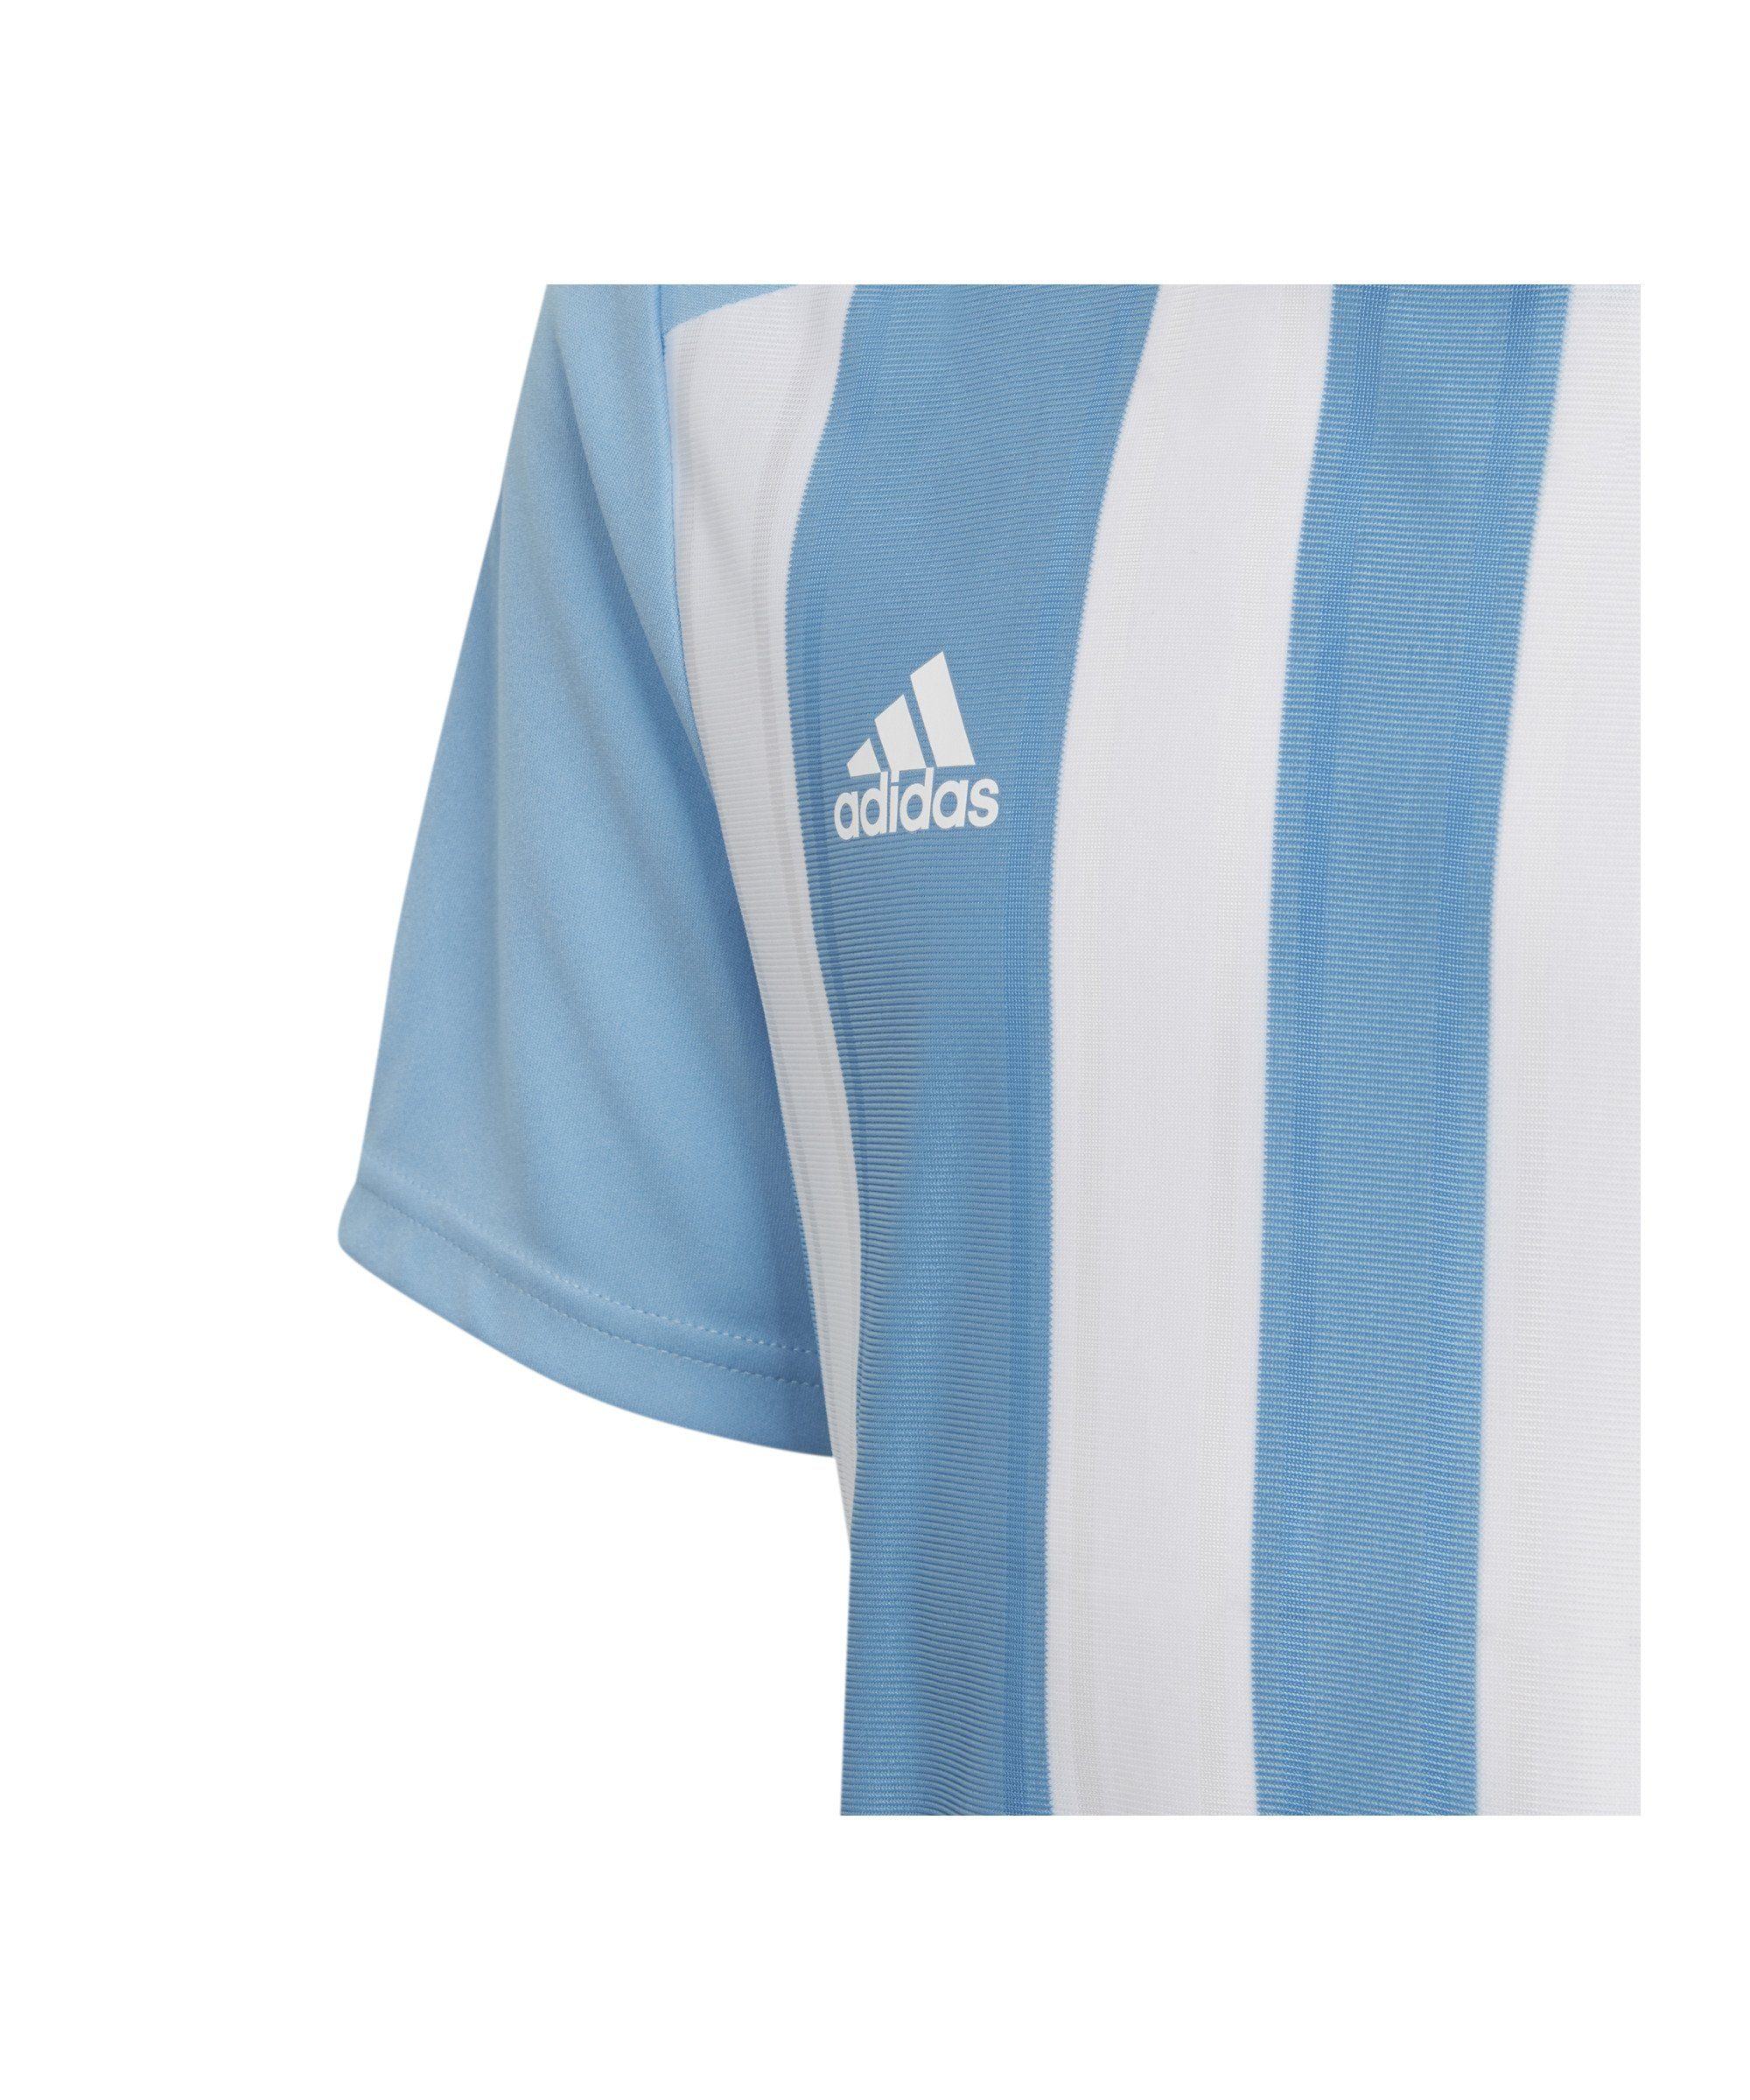 Striped Performance blauweissblau 21 Kids kurzarm Trikot adidas Fußballtrikot